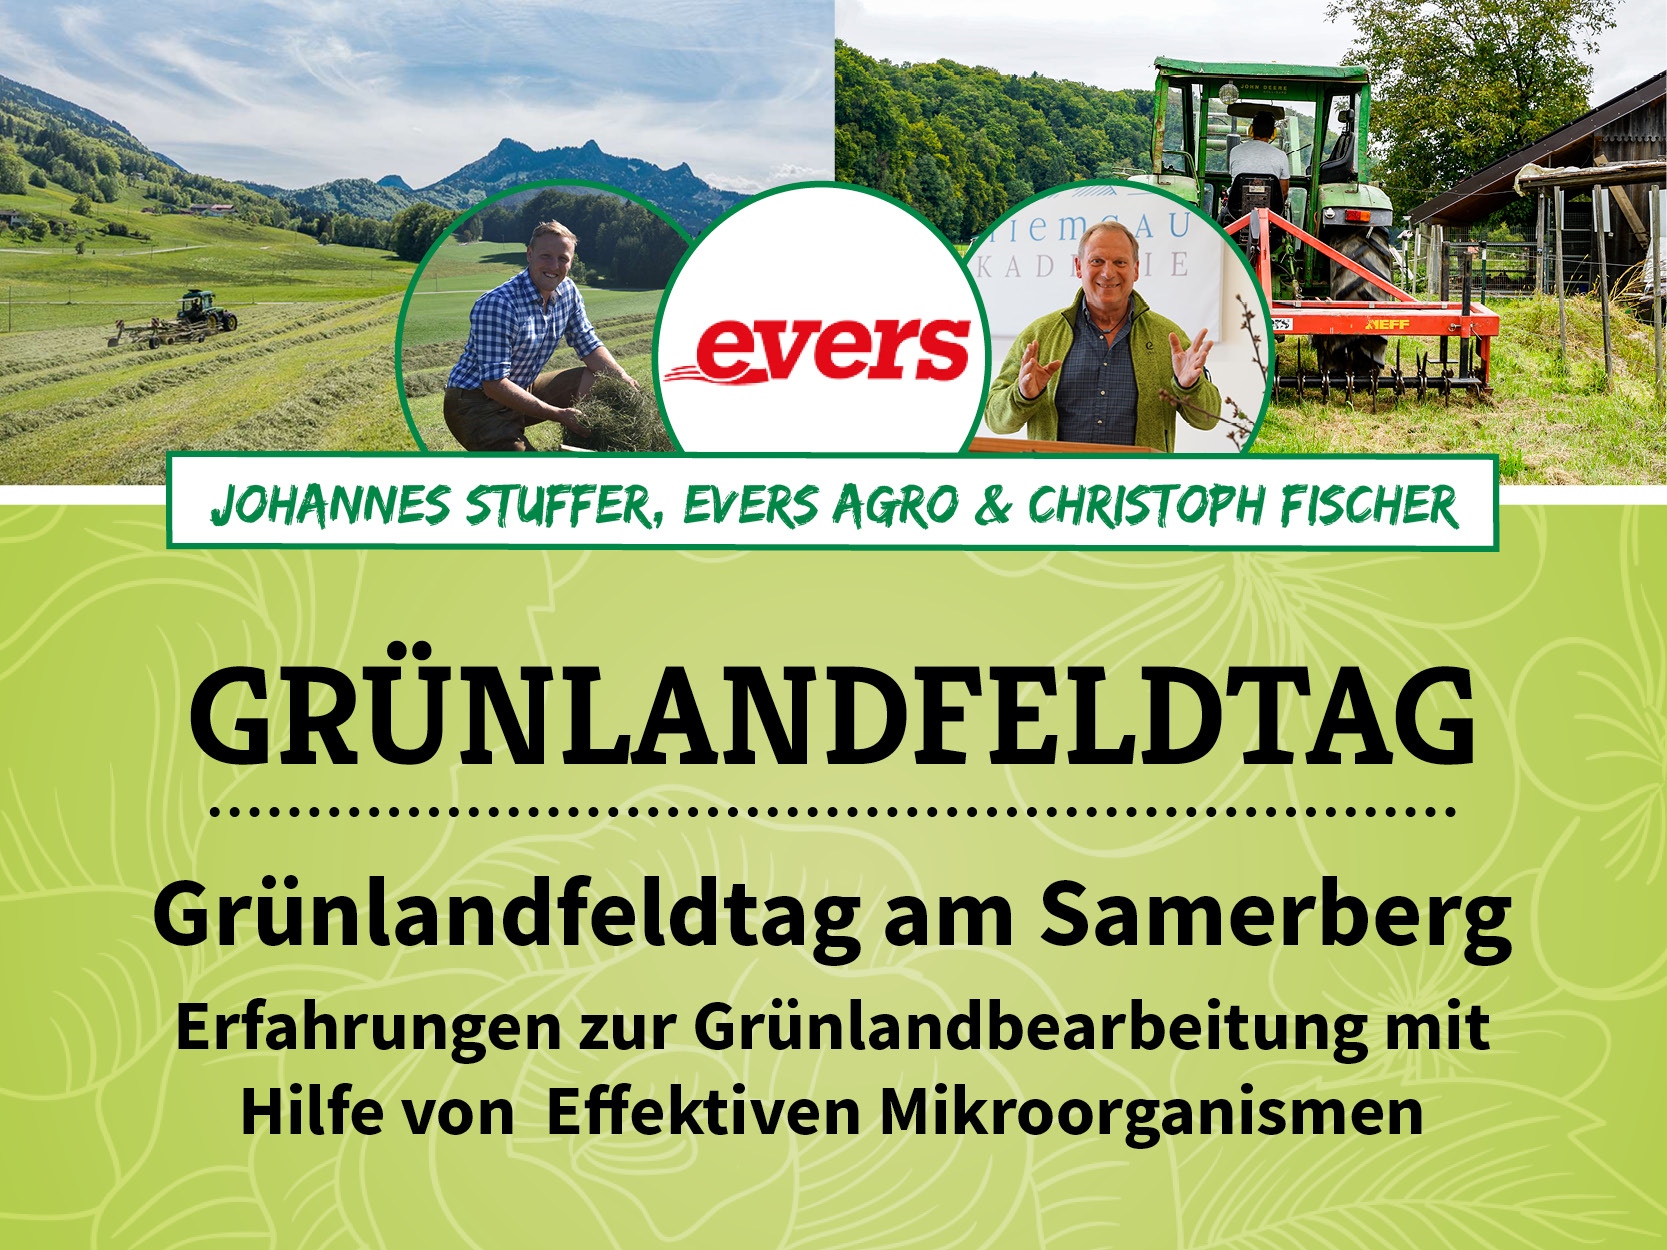 Eventheader für den Grünlandfeldtag am Samerberg bei Stuffer Johannes mit Evers Agro